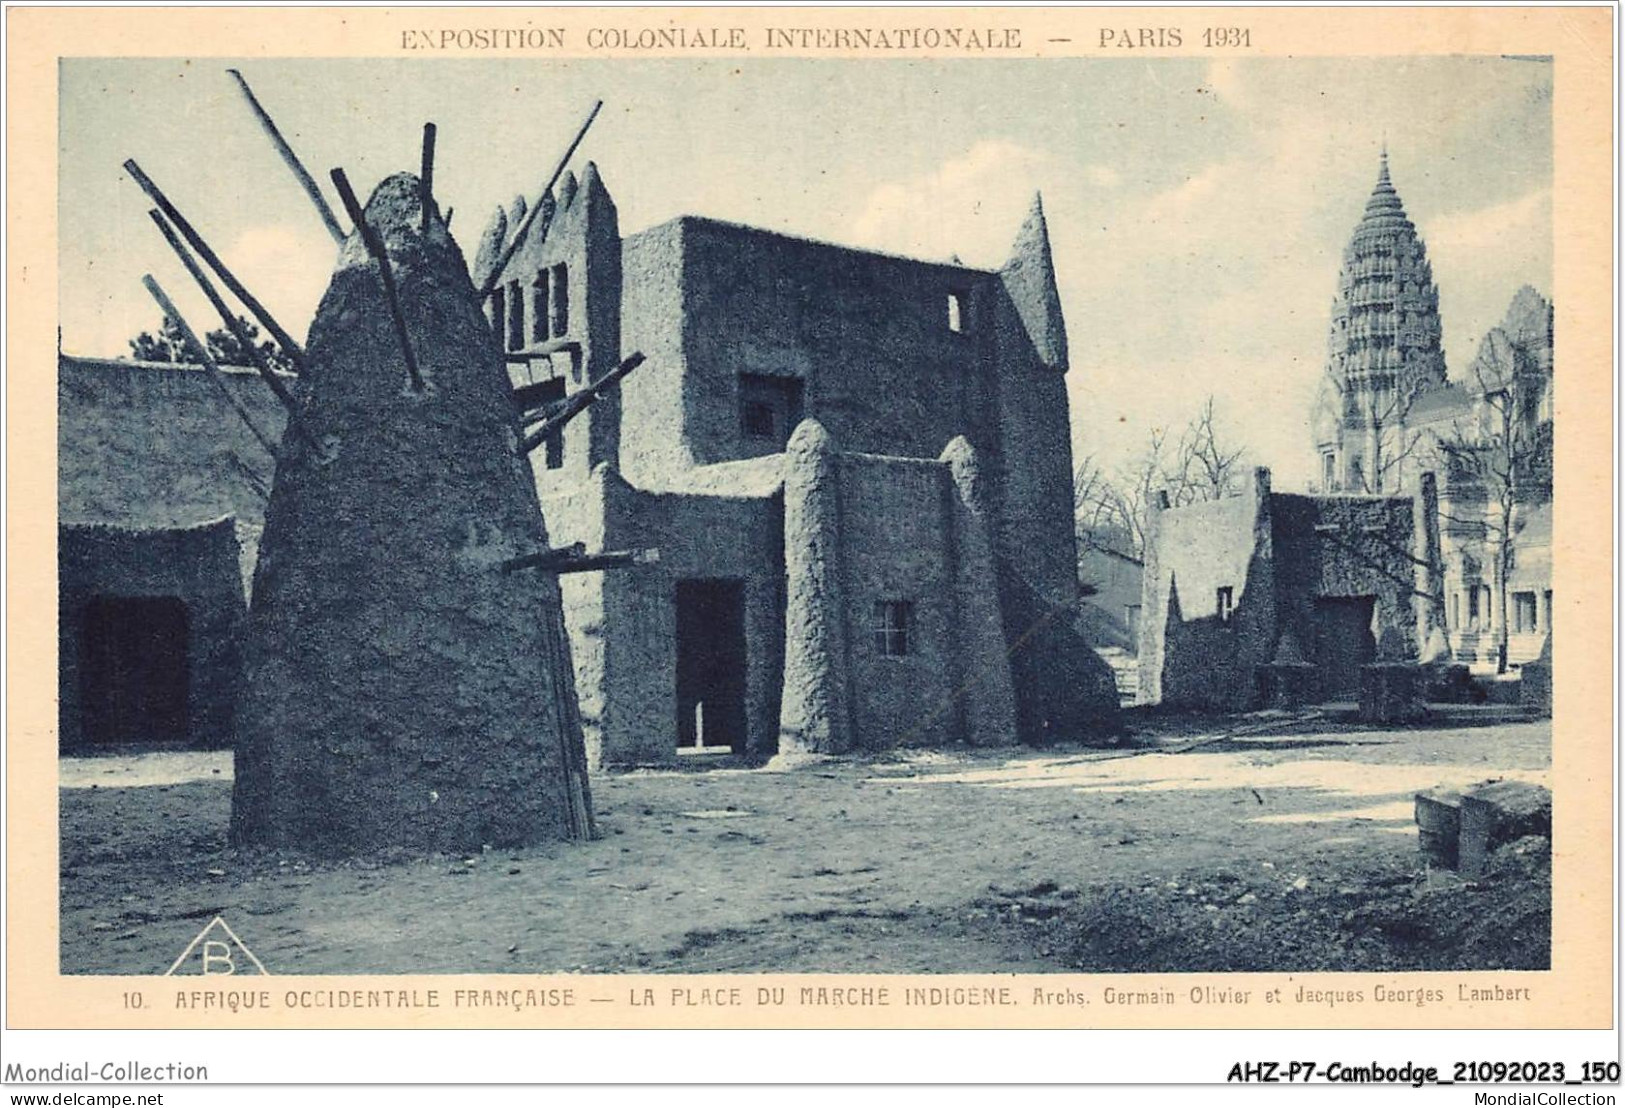 AHZP7-CAMBODGE-0671 - EXPOSITION COLONIALE INTERNATIONALE - PARIS 1931 - AFRIQUE OCCIDENTALE FRANCAISE - MARCHE INDIGENE - Cambodge